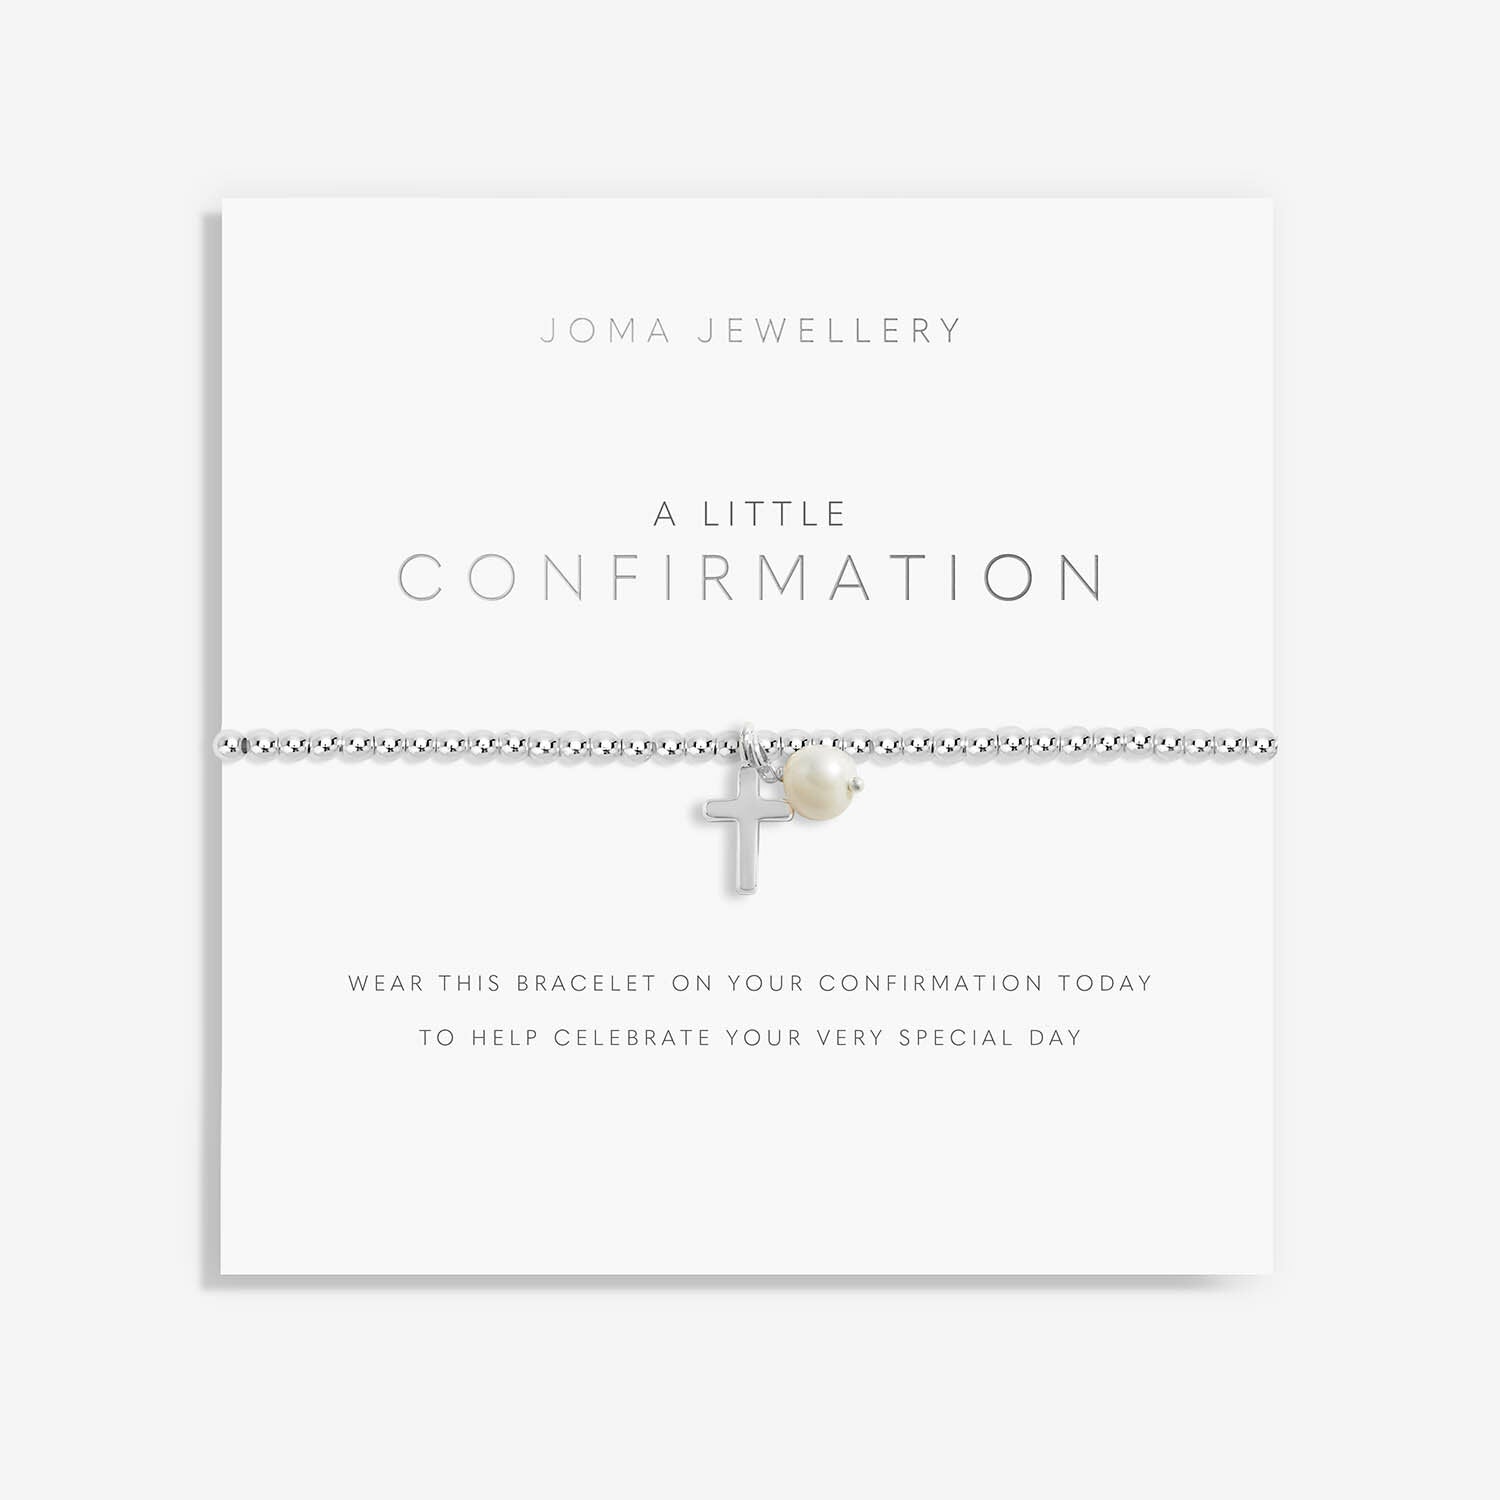 Joma Jewellery A Little 'Confirmation' Bracelet